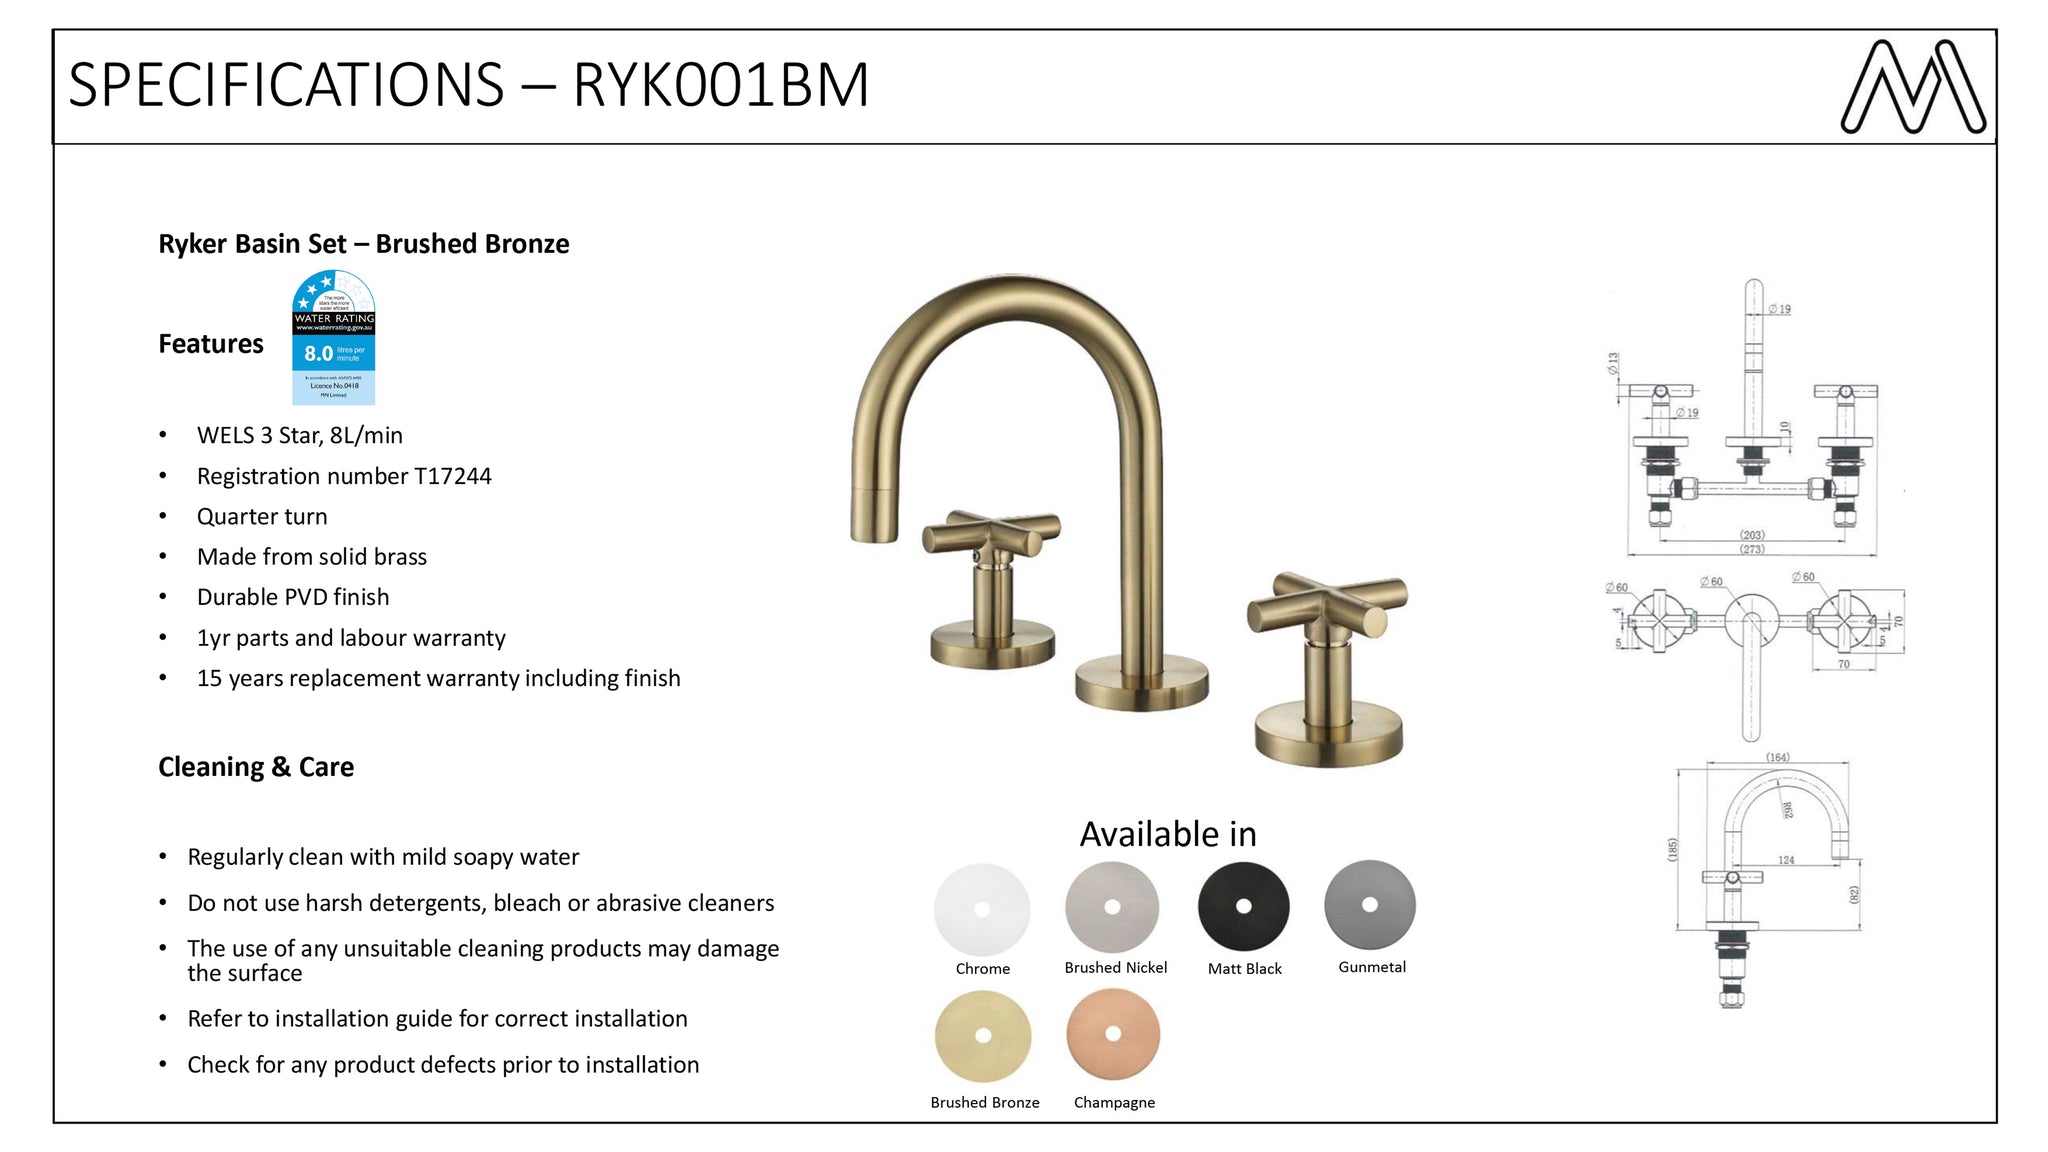 Ryker Basin Set – Brushed Bronze